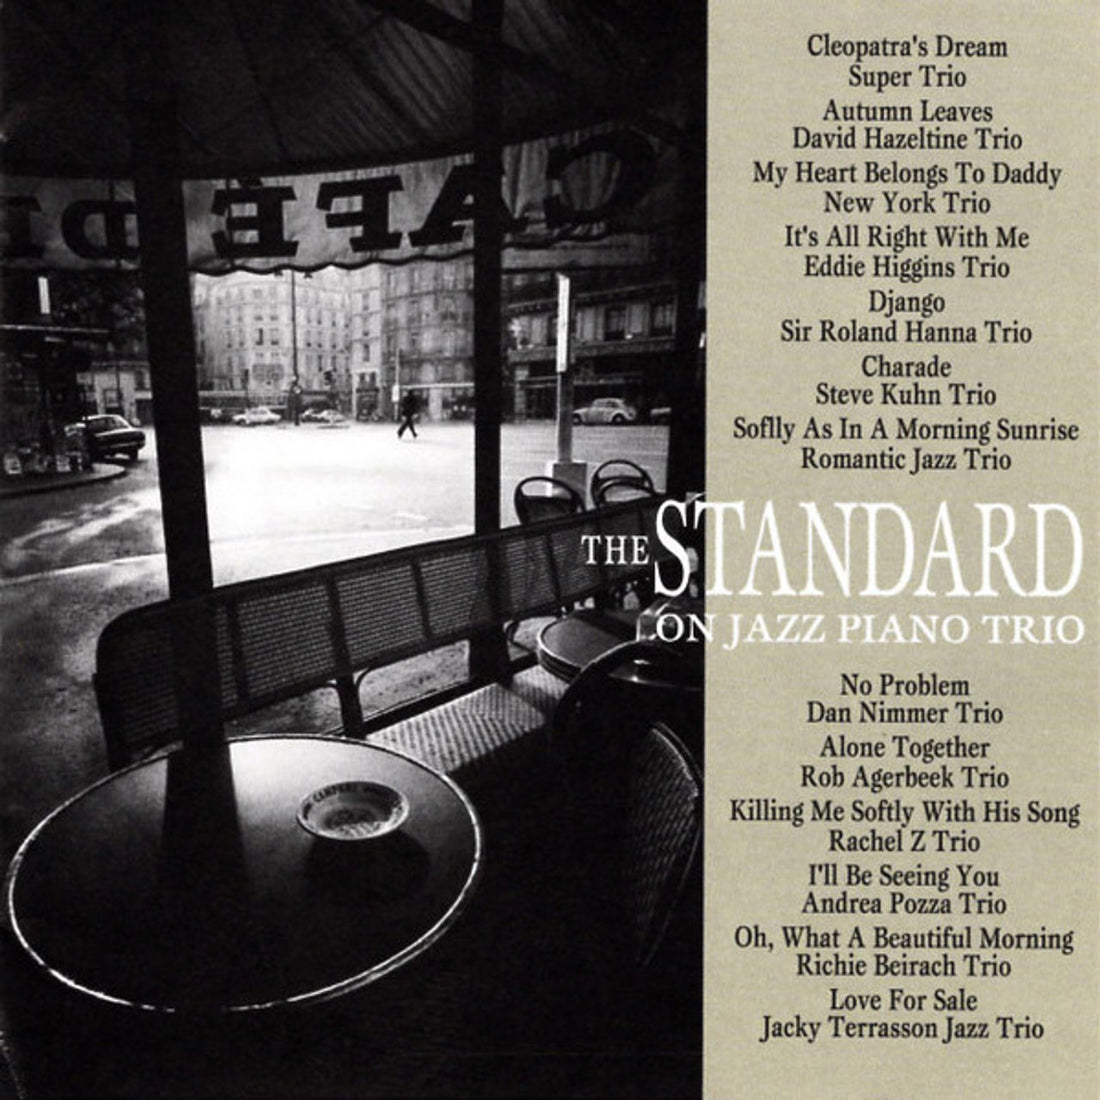 The Standard on Jazz Piano Trio